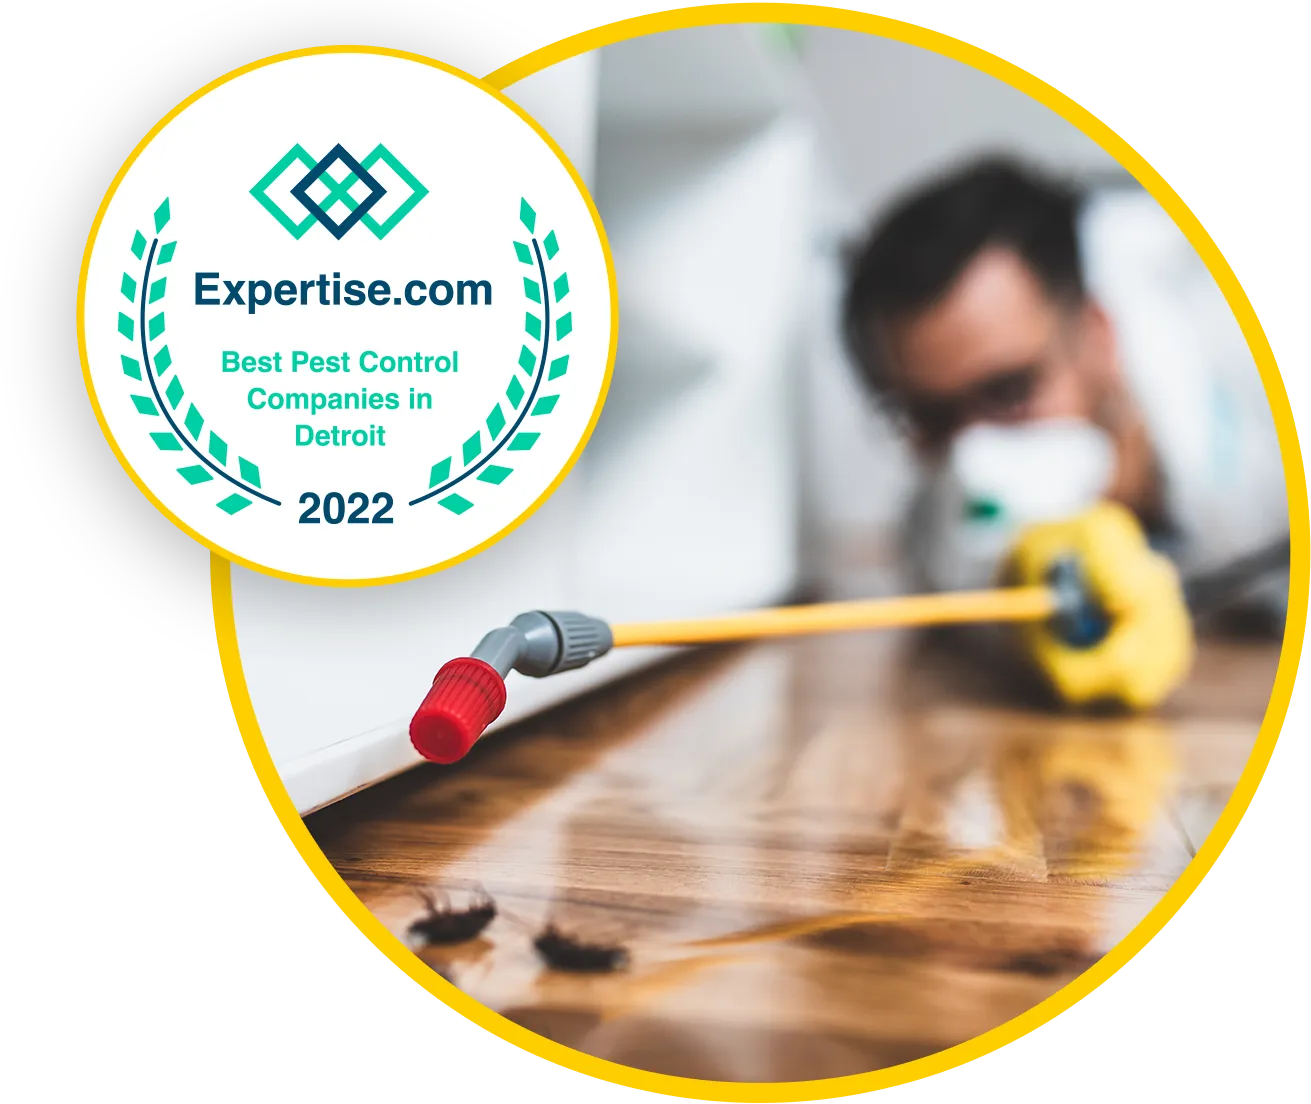 Expertise Pest Control Award 2022 Detroit